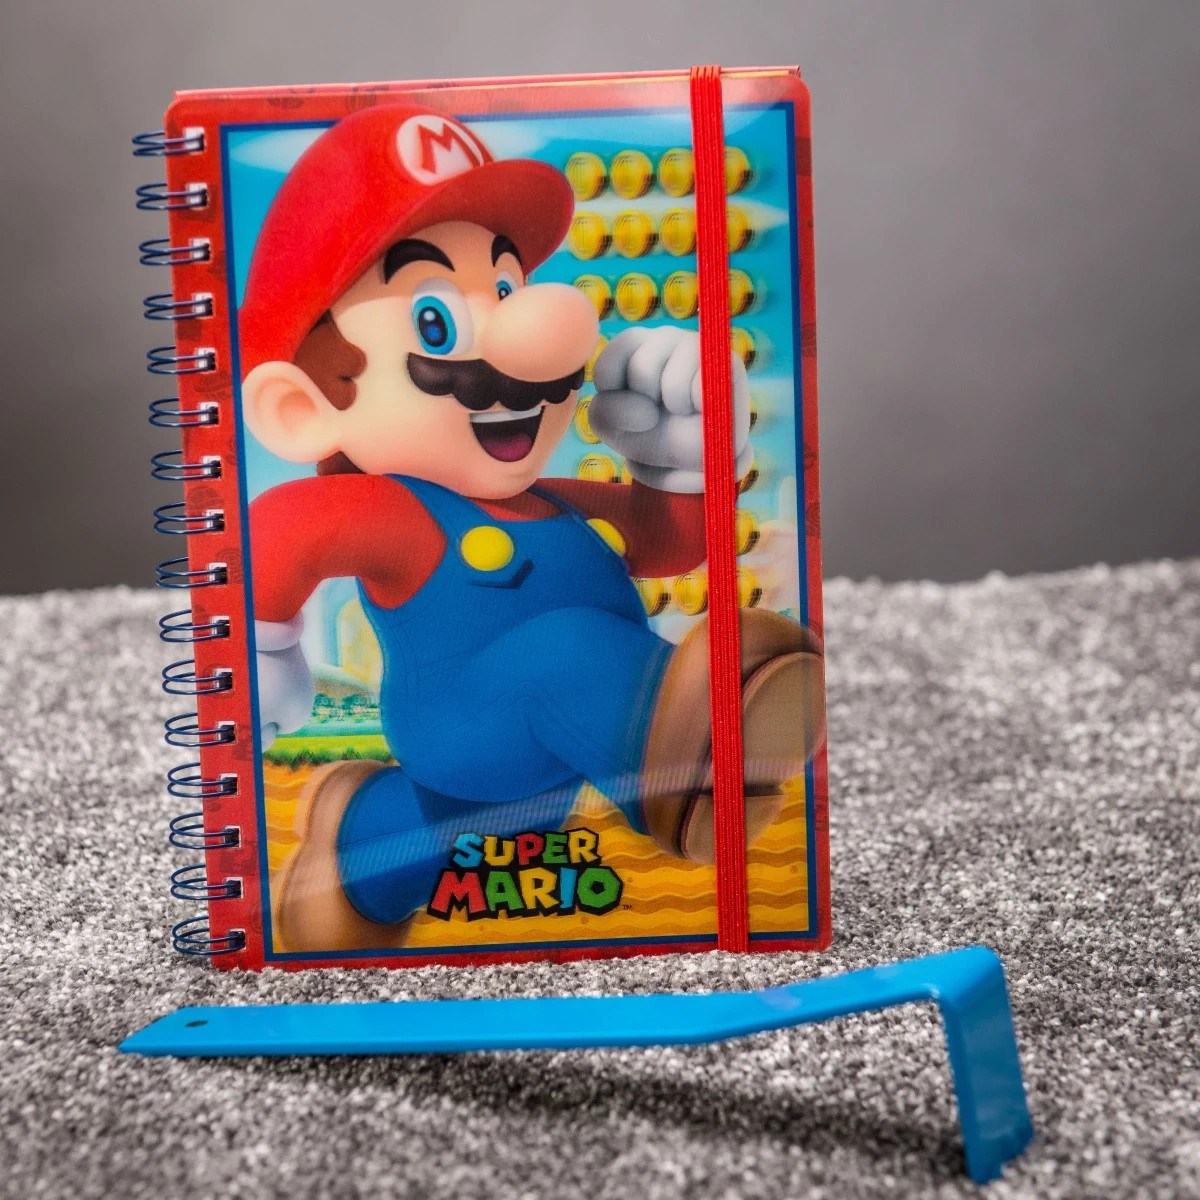 Bedna pro fanouška hry Super Mario